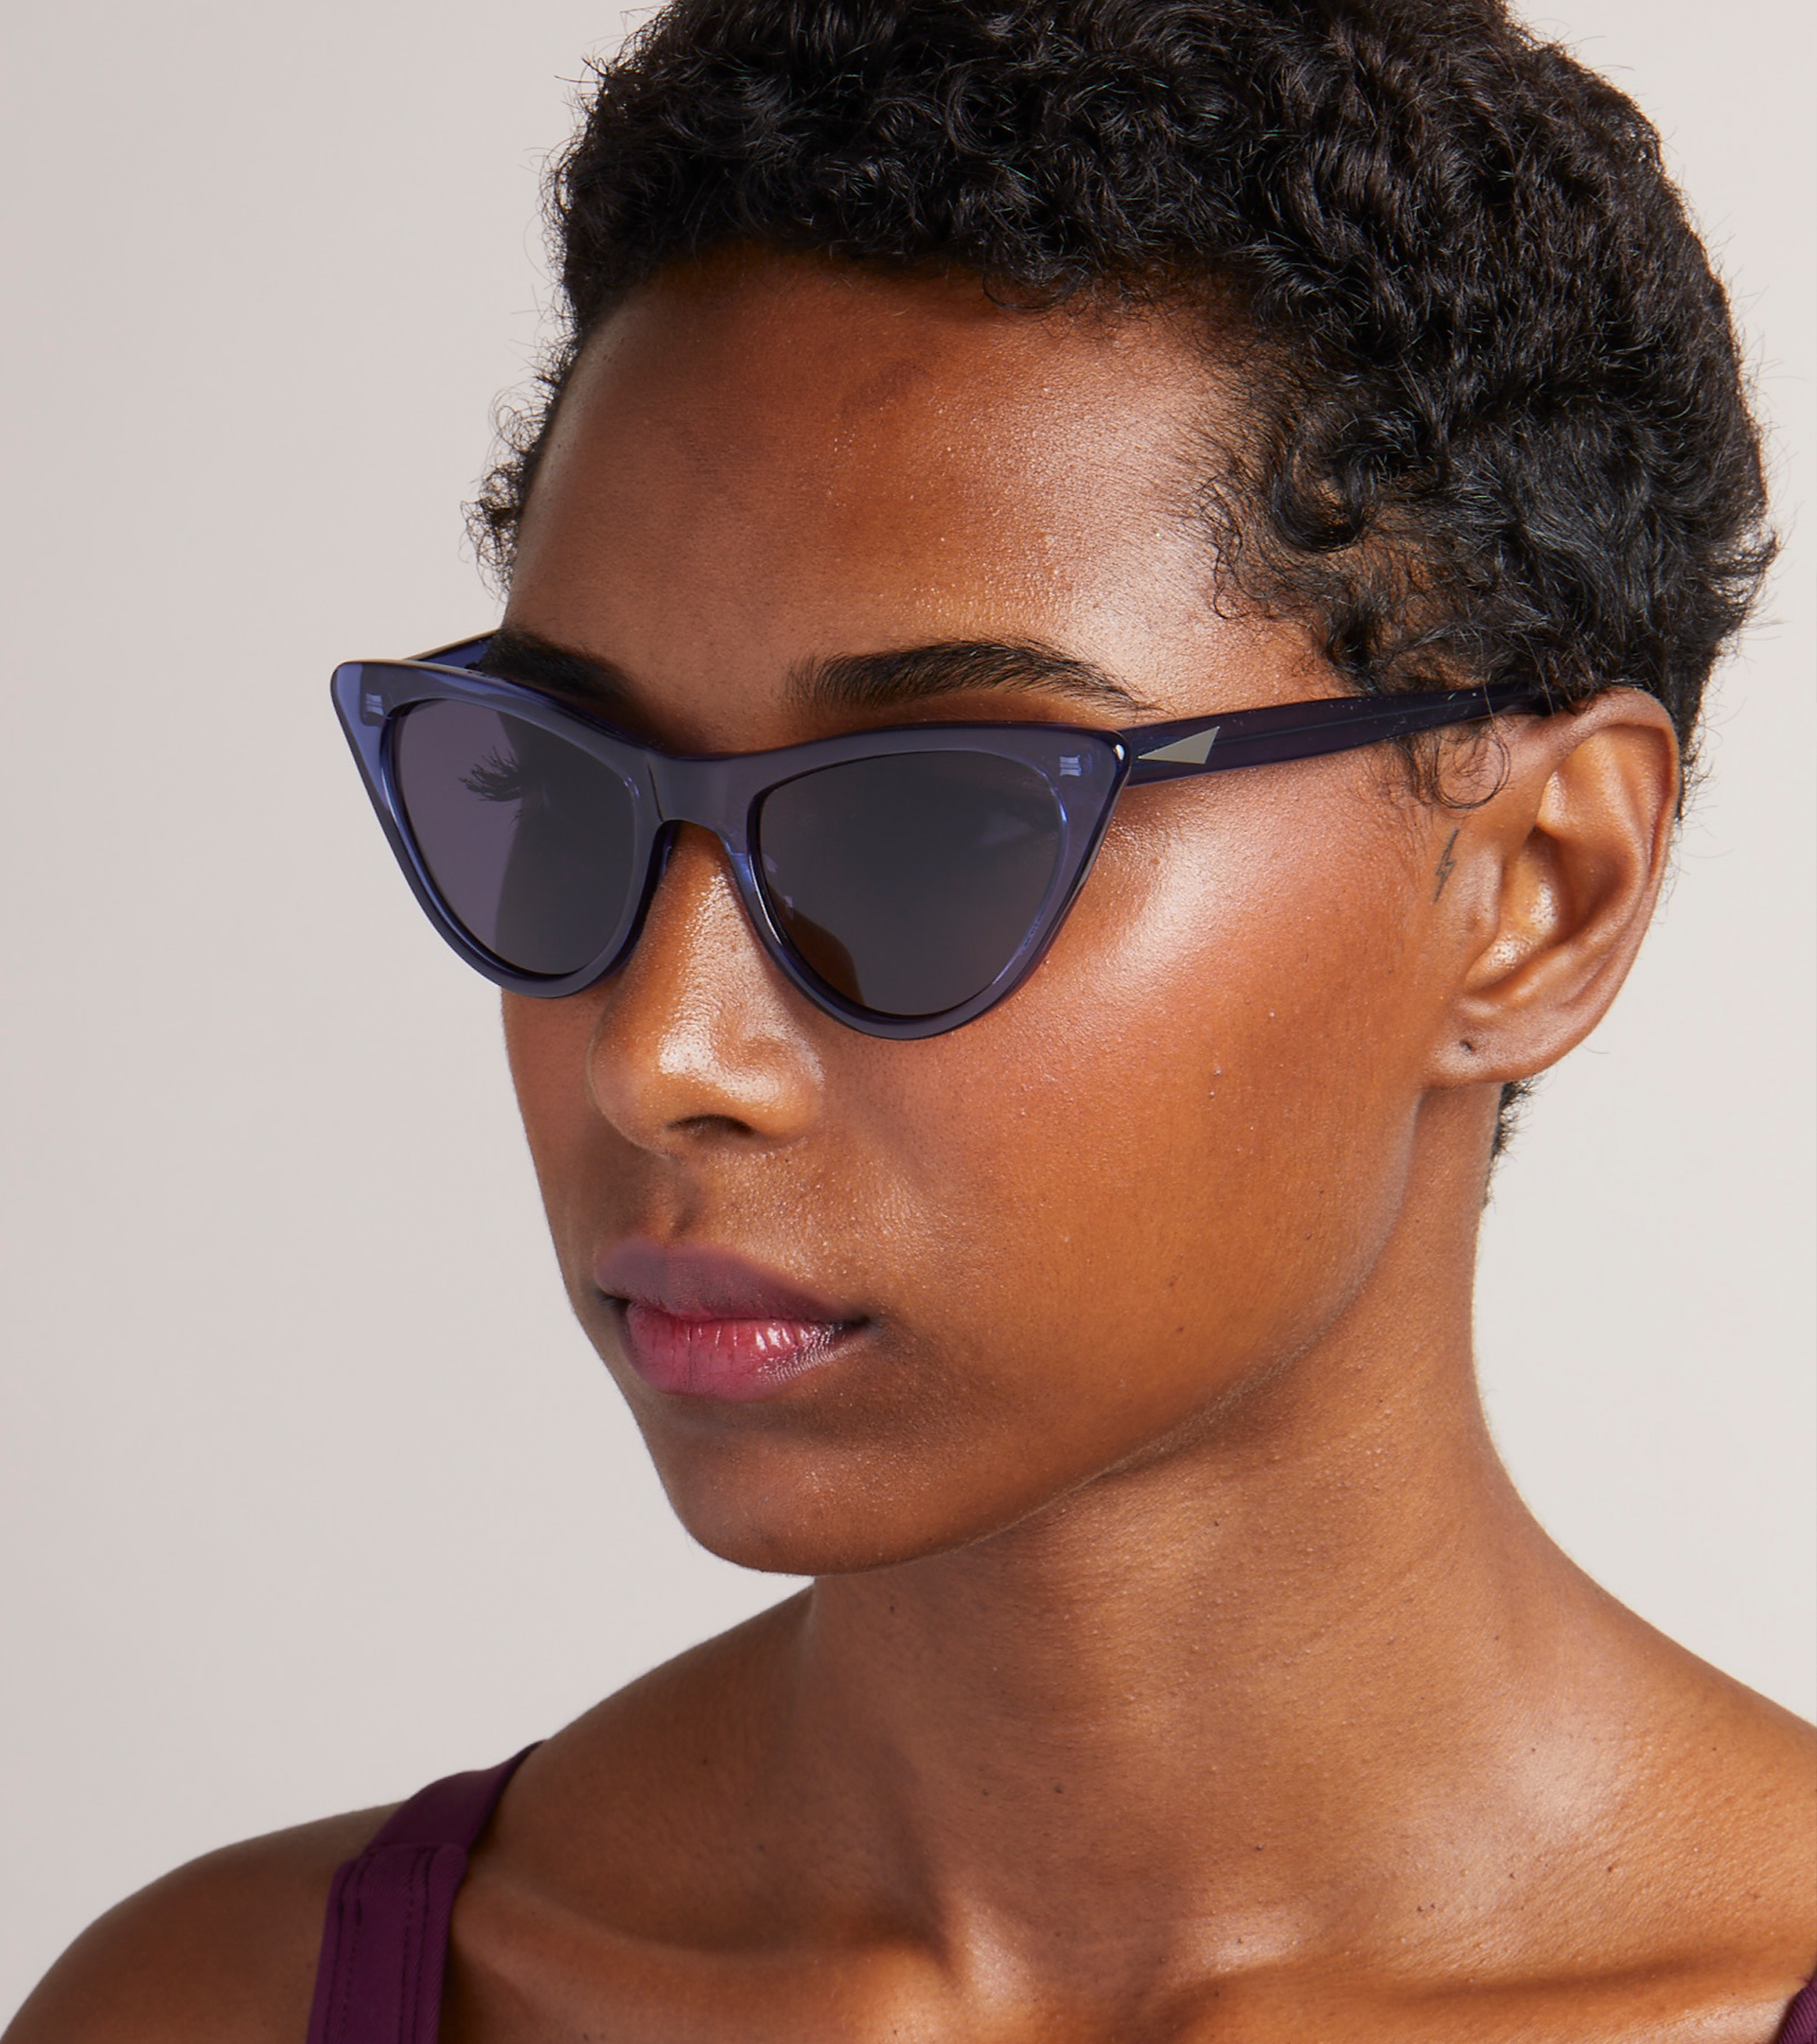 Woman wearing black PRISM sunglasses